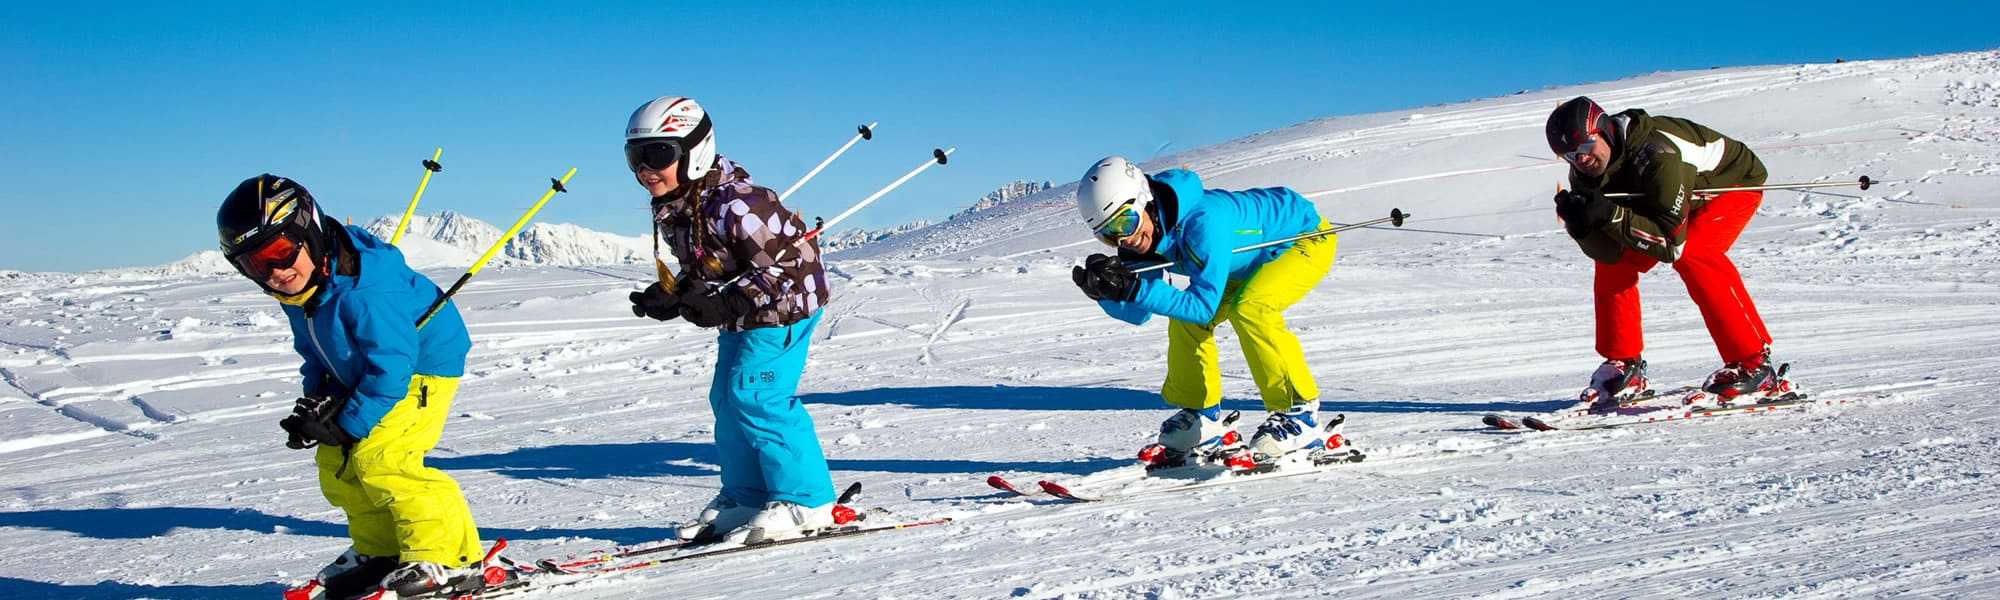 Skifahren im Familienurlaub © www.grossarltal.info